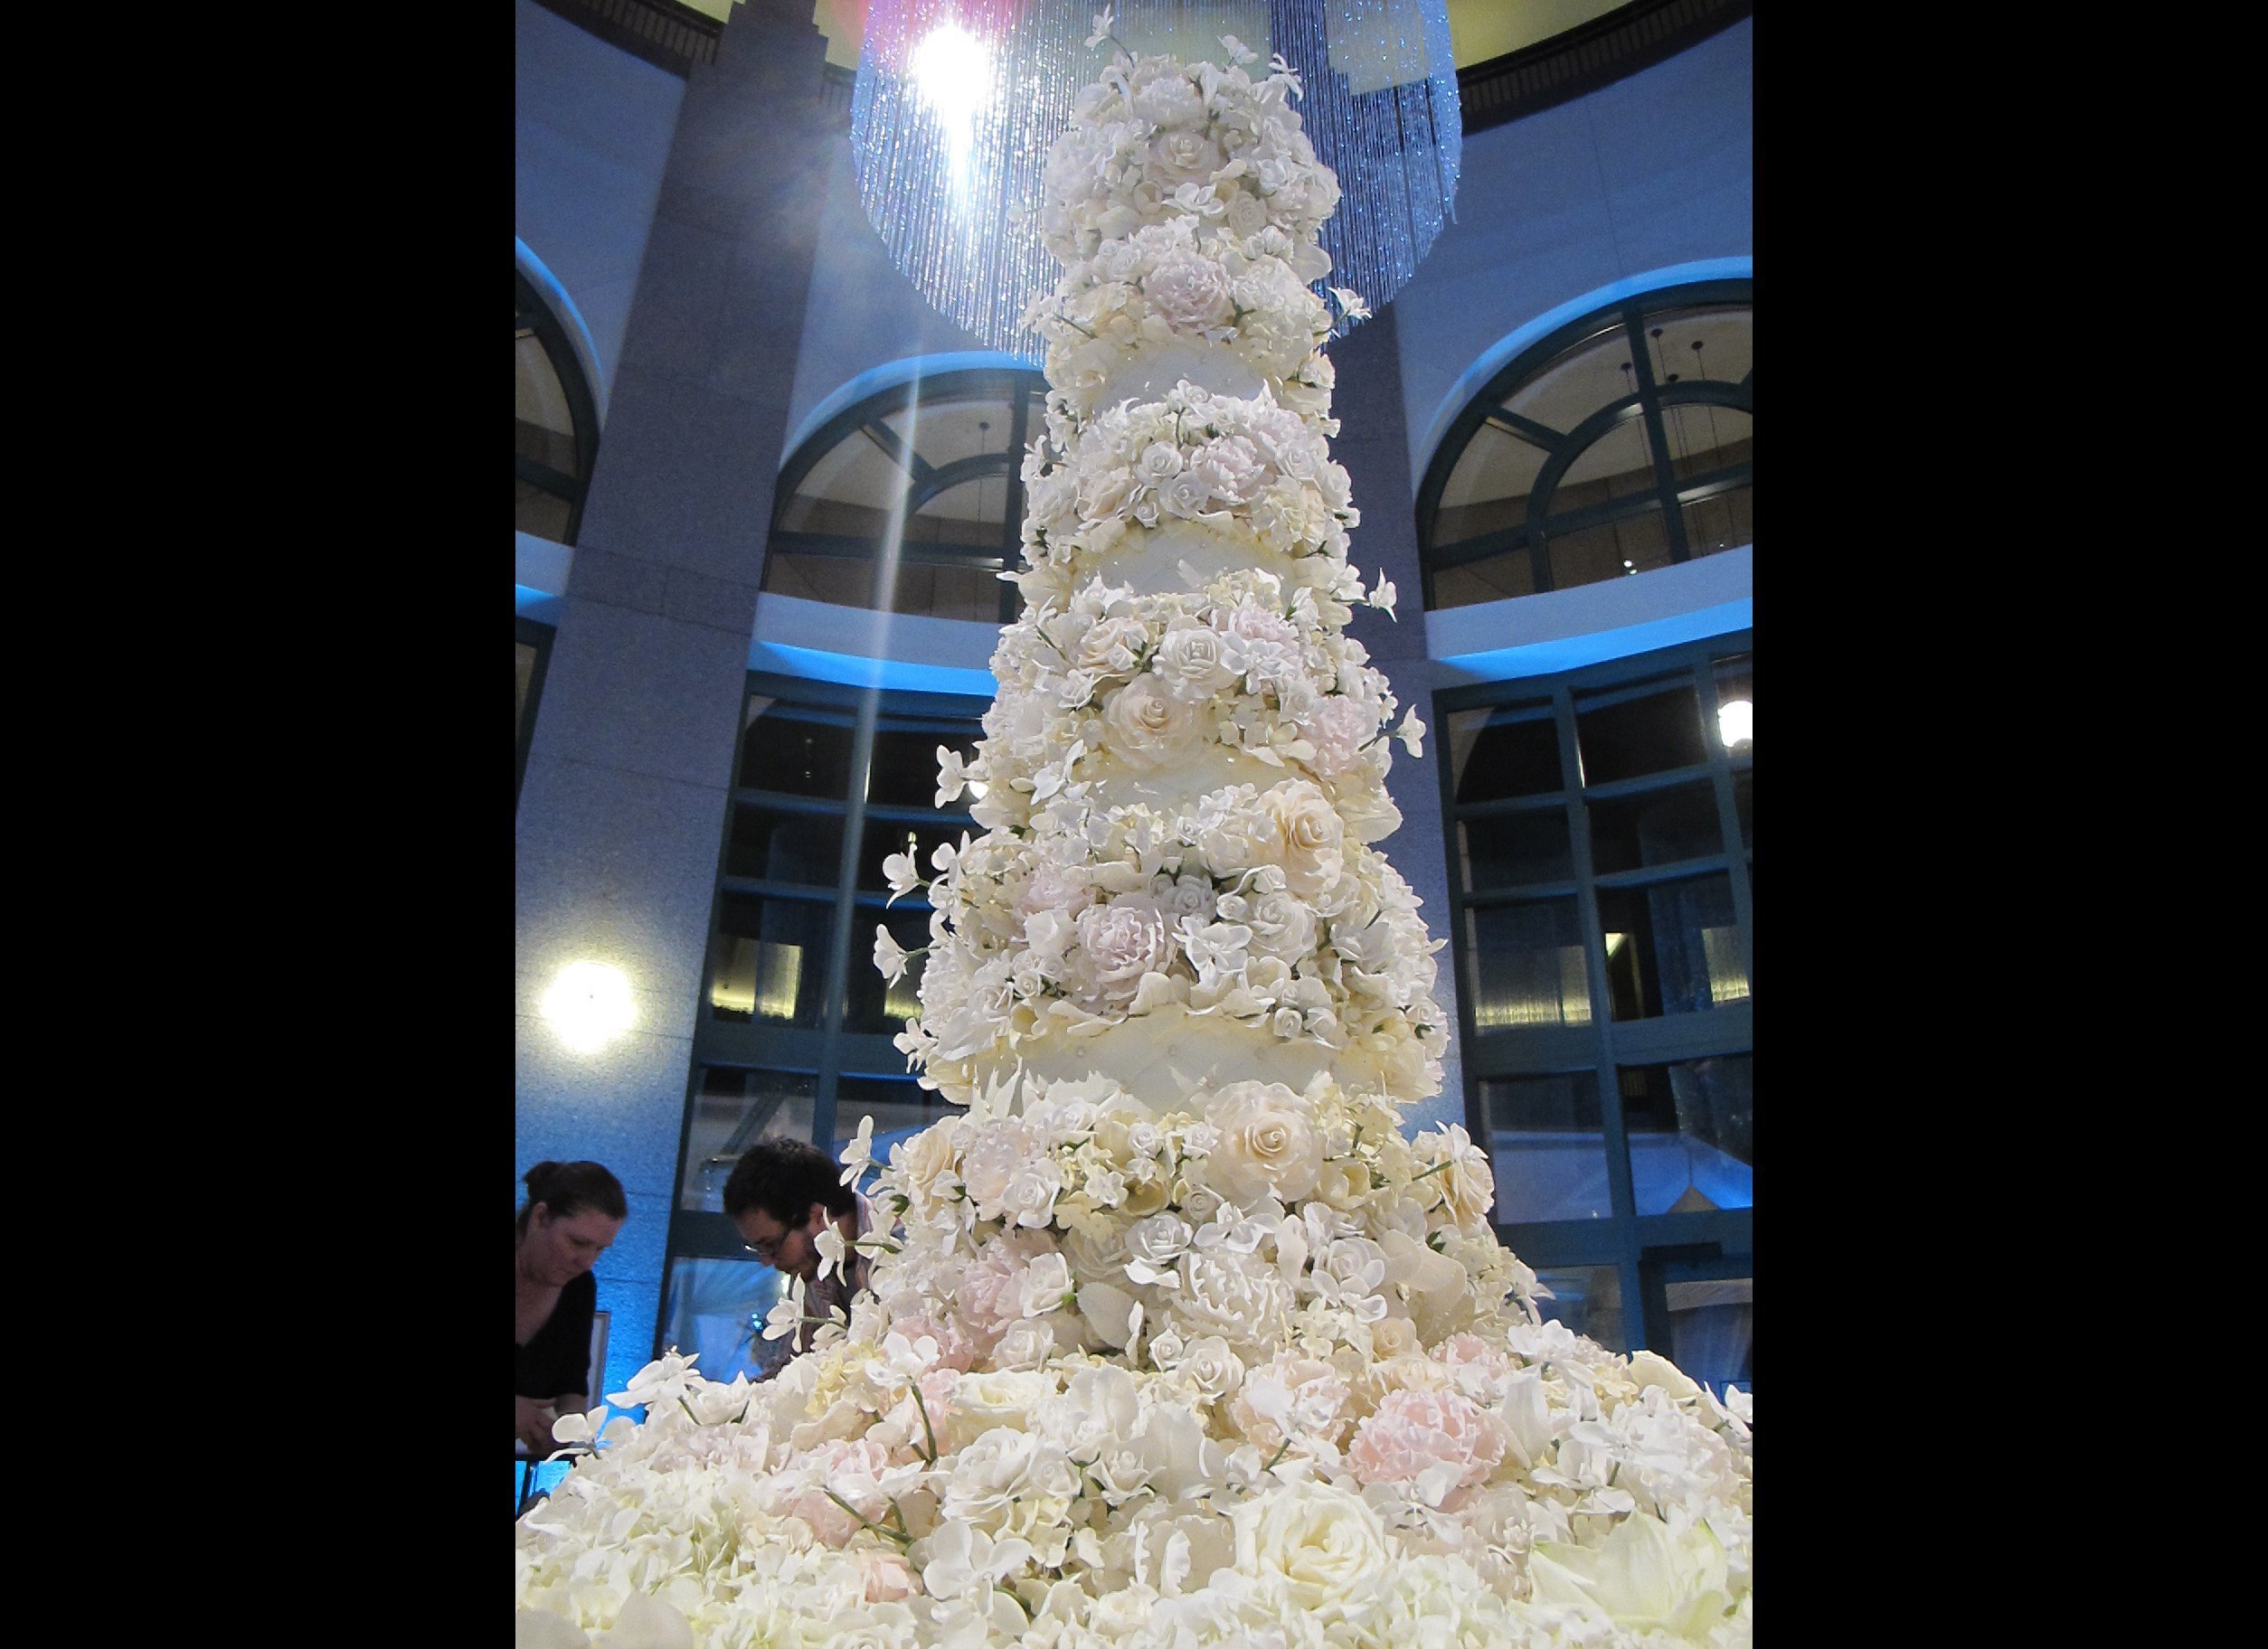 The world's largest wedding cake... - 7 Star Wheat Flour | Facebook